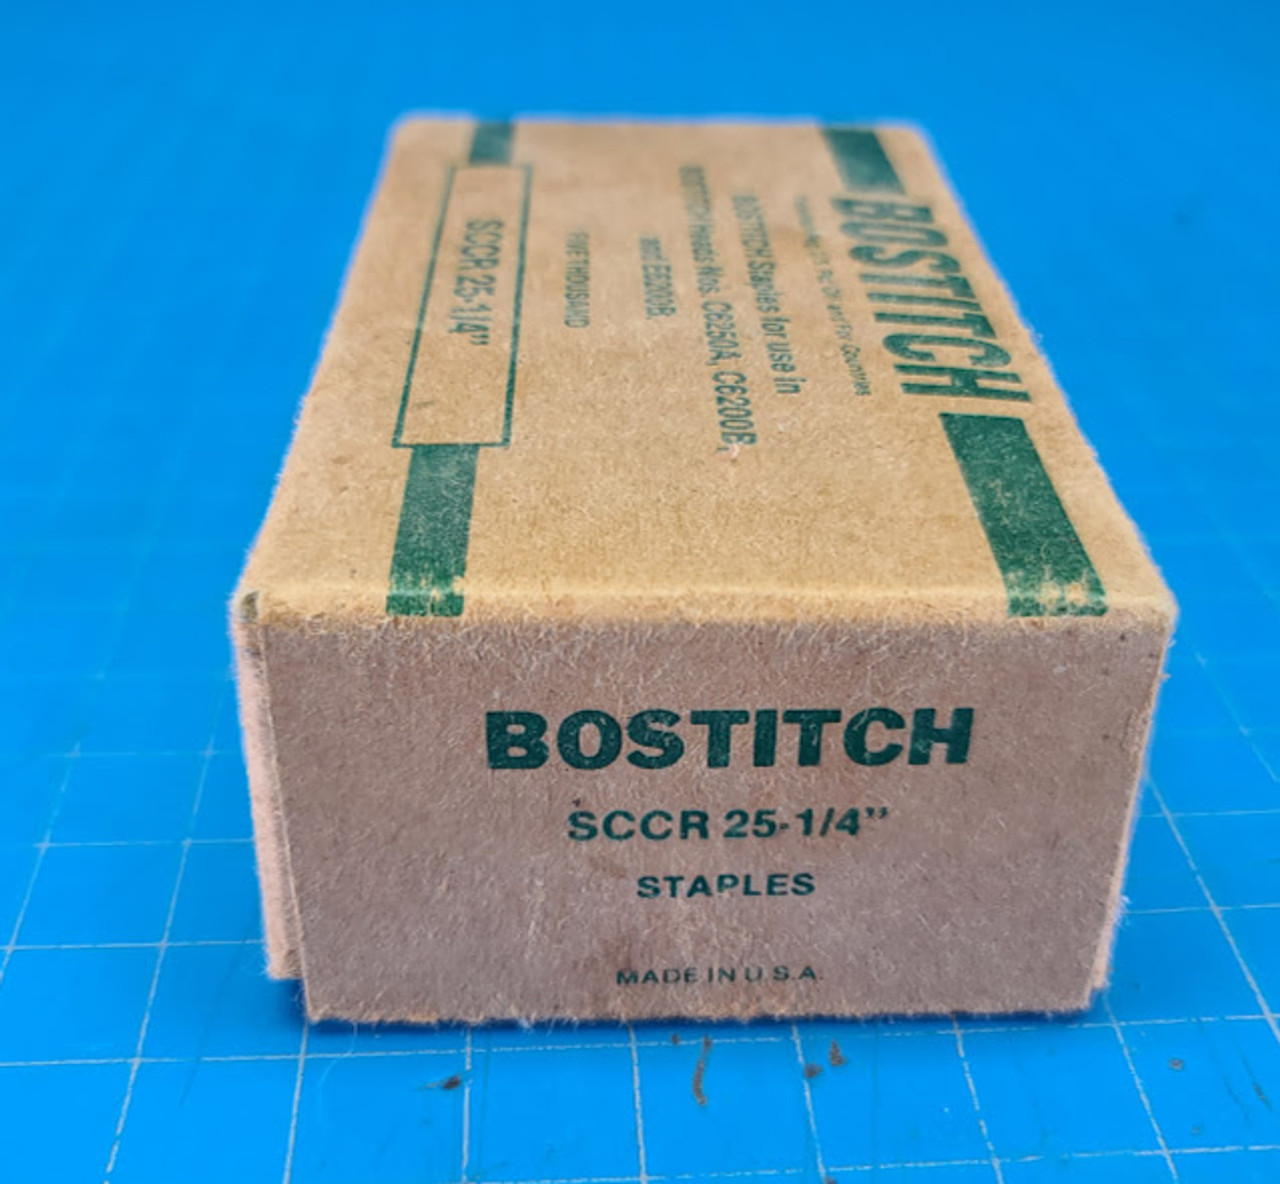 Bostitch SCCR 25-1/4" Staples Box of 5000